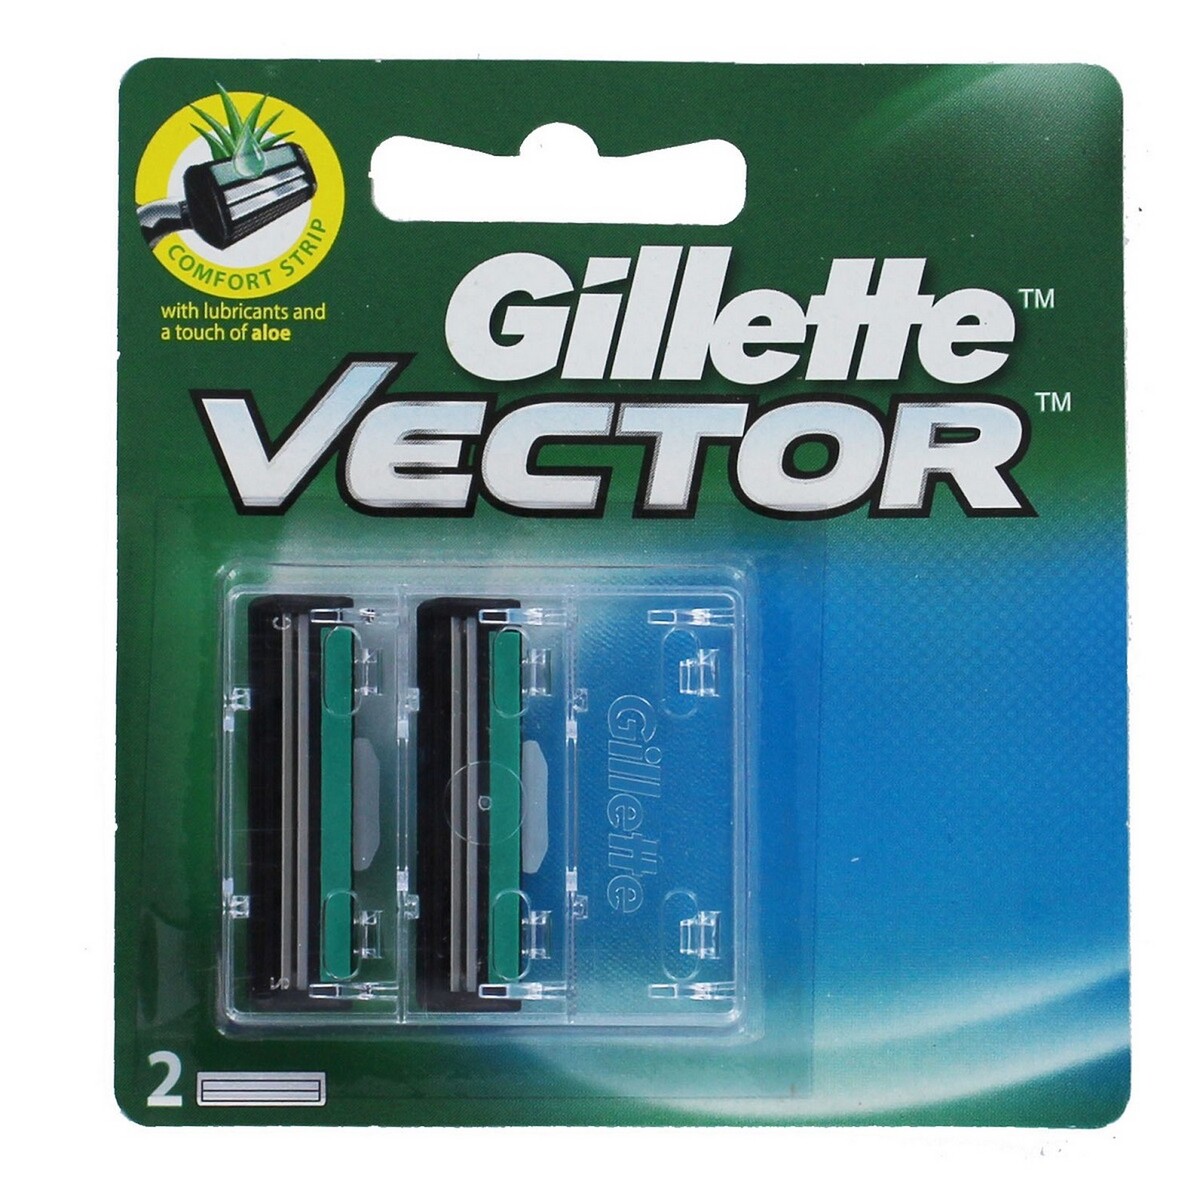 Gillette Cartridge Vector Plus 2's